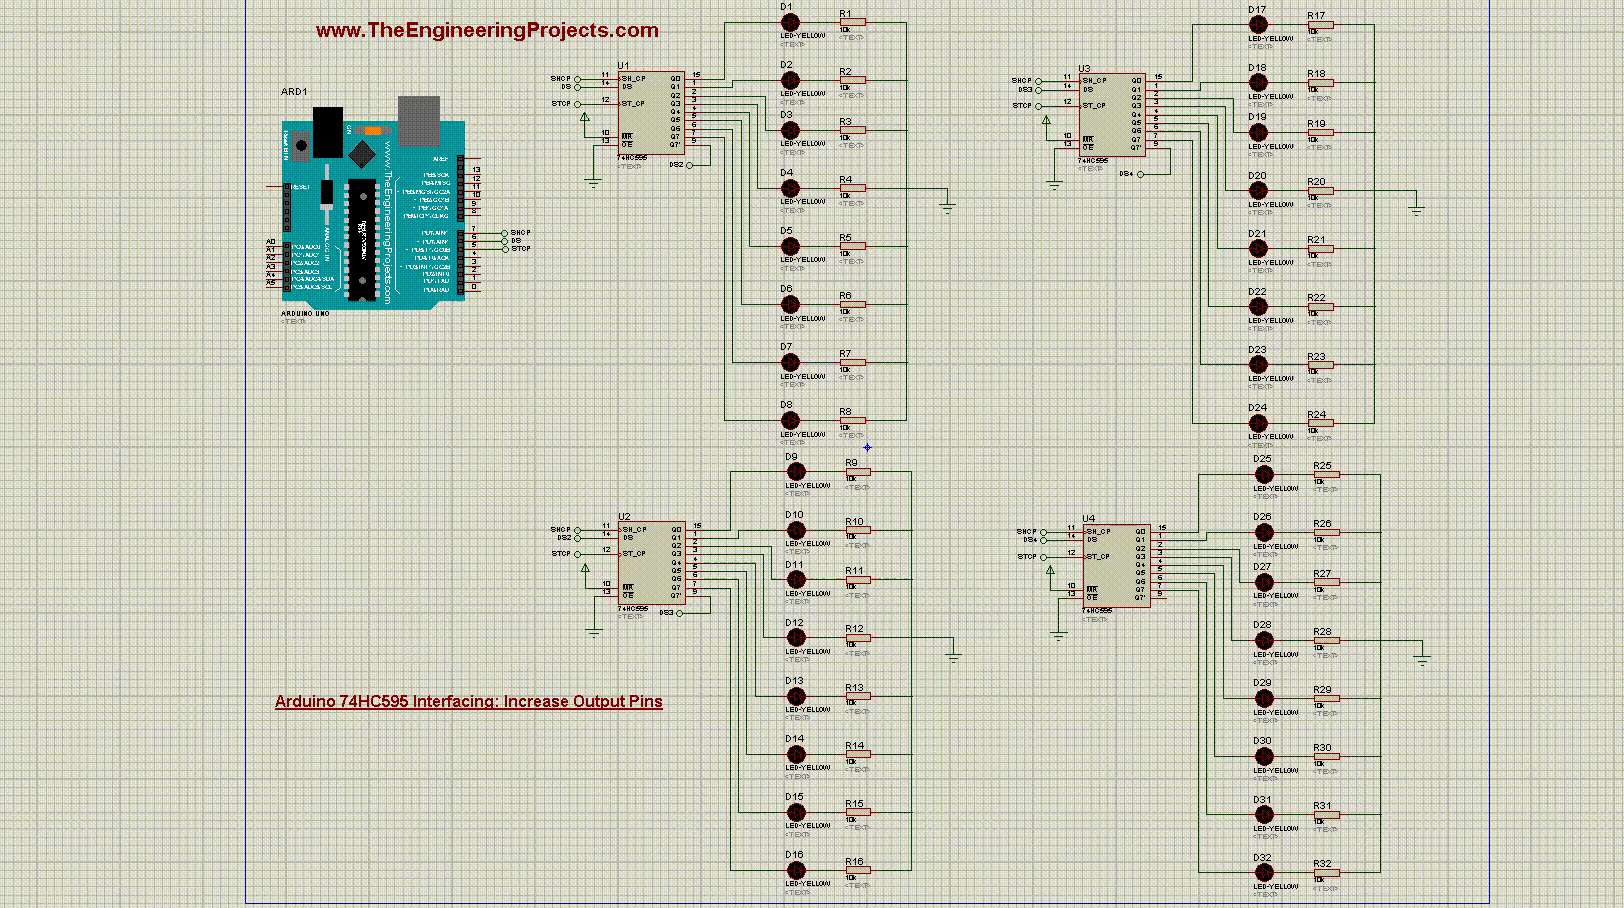 Arduino 74HC595,Arduino 74HC595 interfacing, increase arduino output pins, arduino output increase, 74hc595 arduino